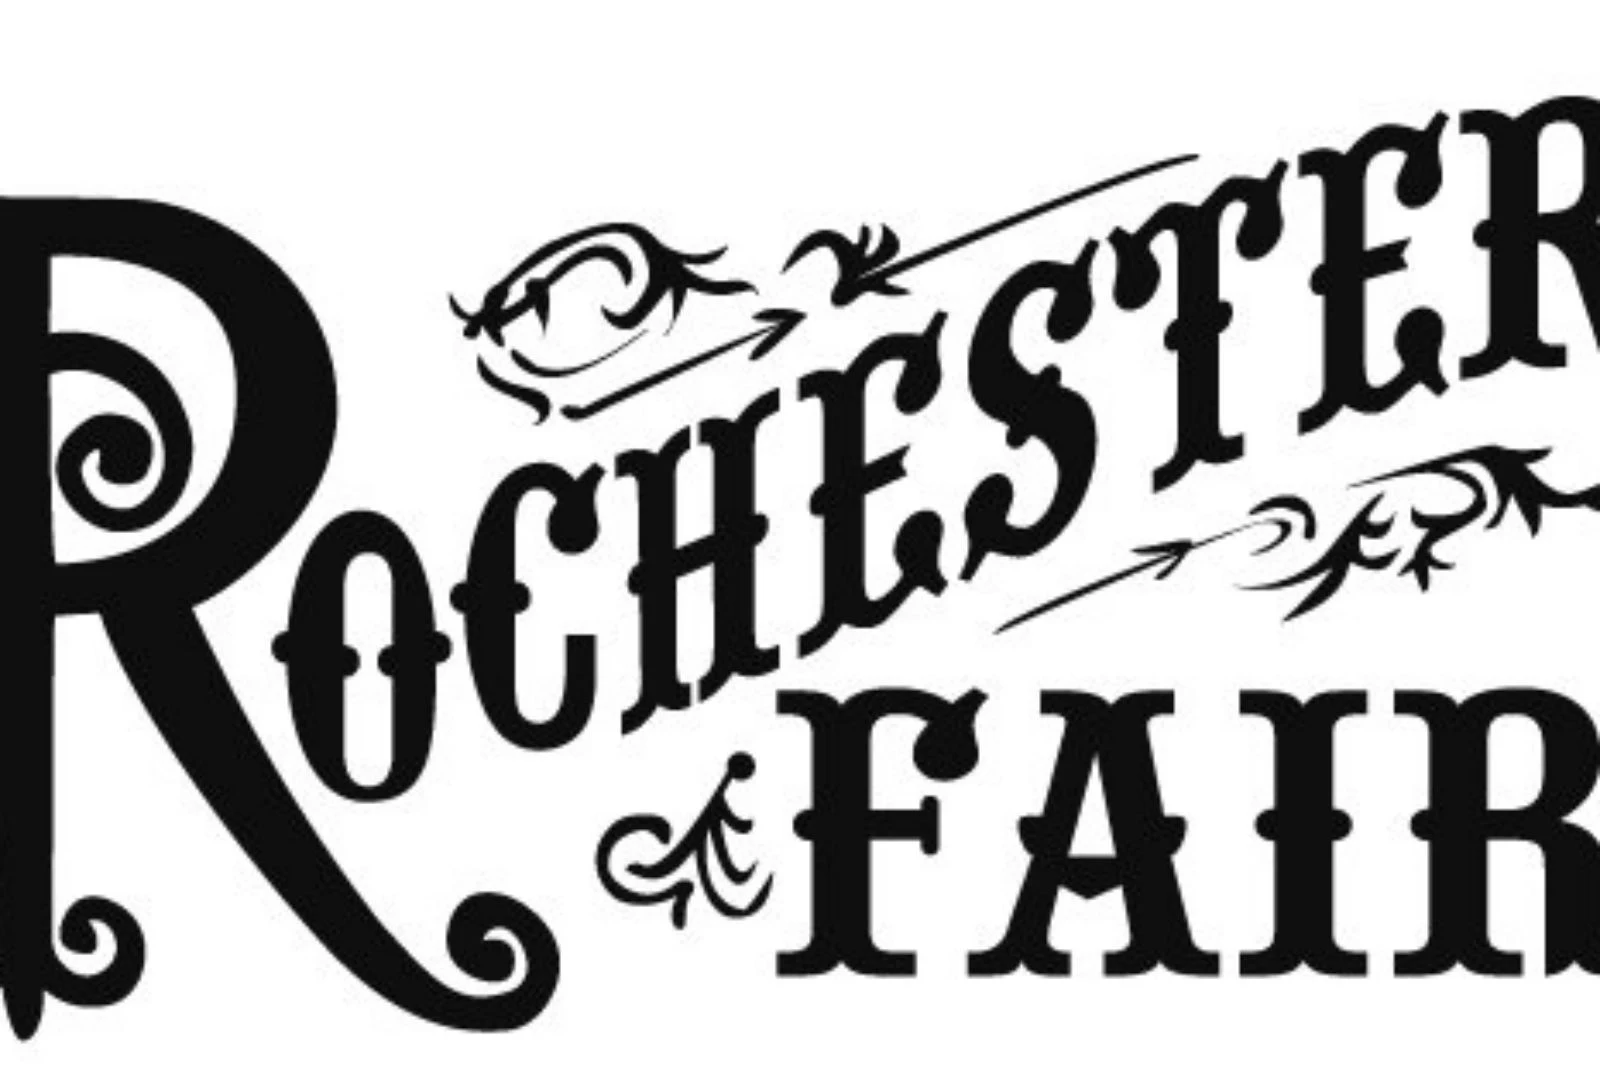 Rochester Fair 94.3 WCYY